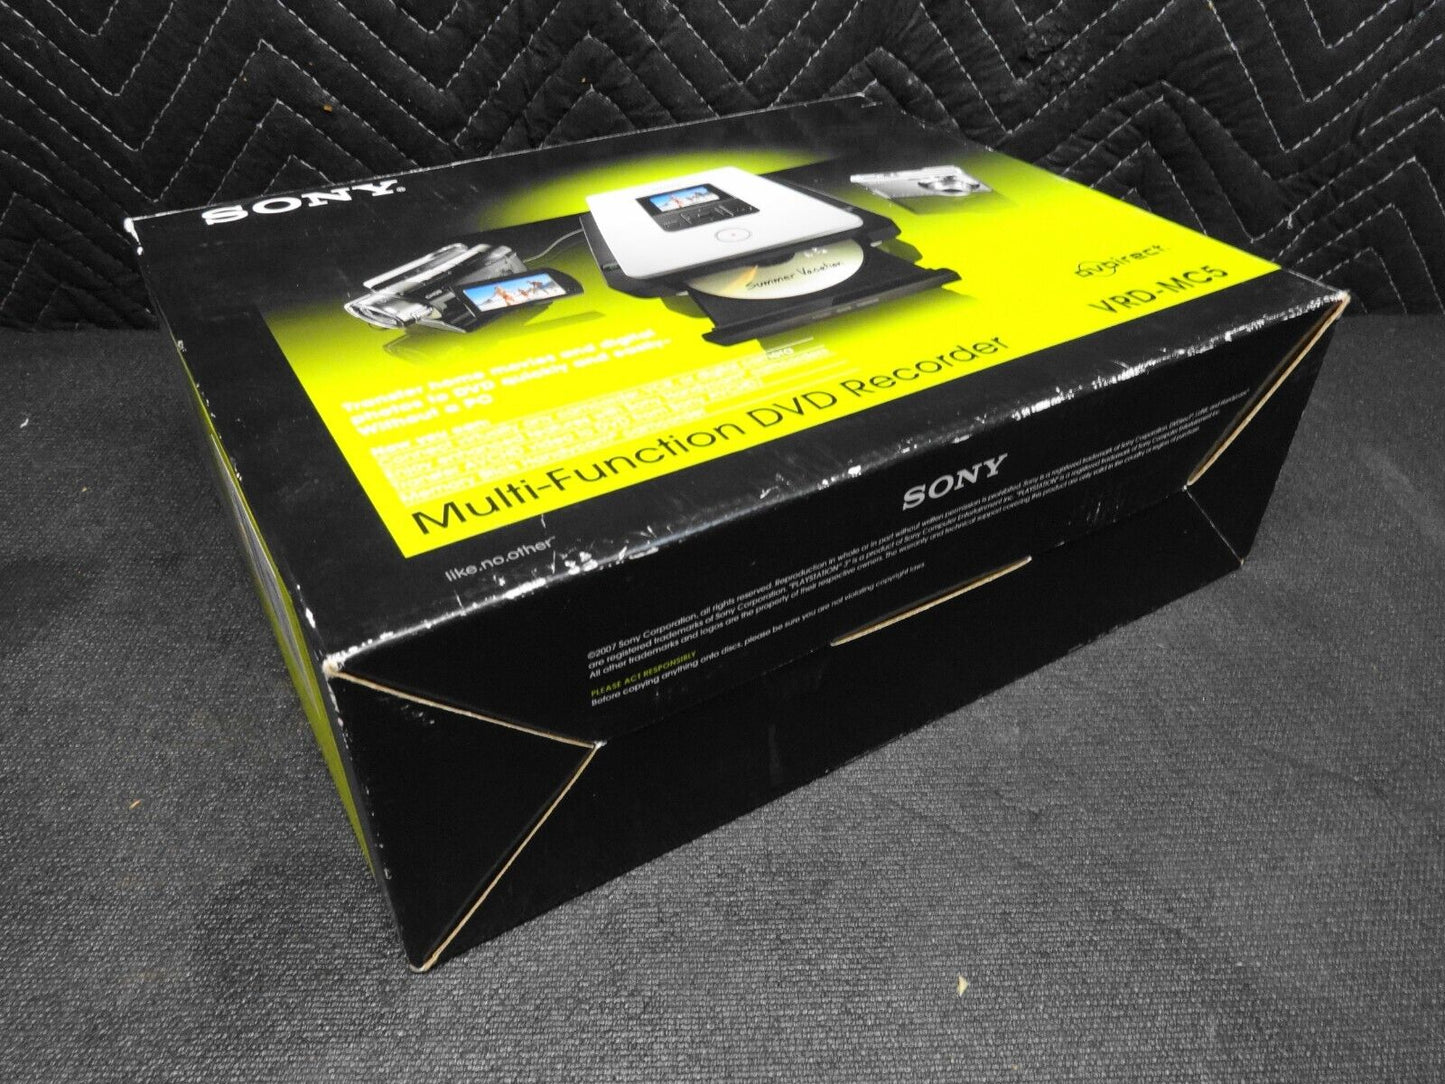 Sony Multi-Function DVD Recorder VRD-MC5 Camcorder or VHS to DVD Converter NIB